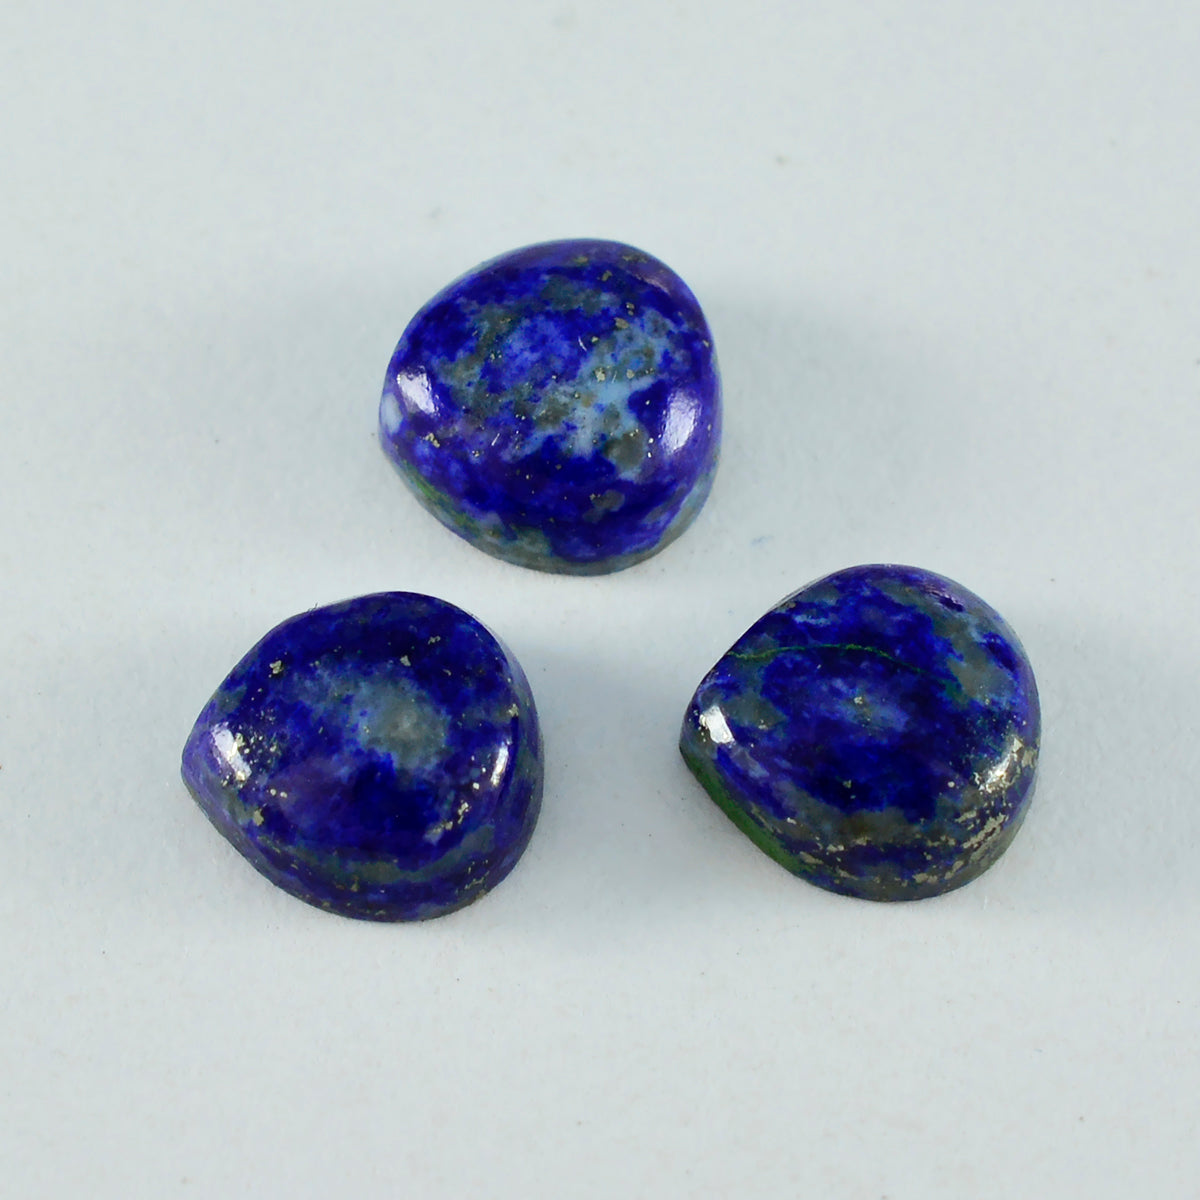 Riyogems 1PC Blue Lapis Lazuli Cabochon 13x13 mm Heart Shape attractive Quality Loose Gem